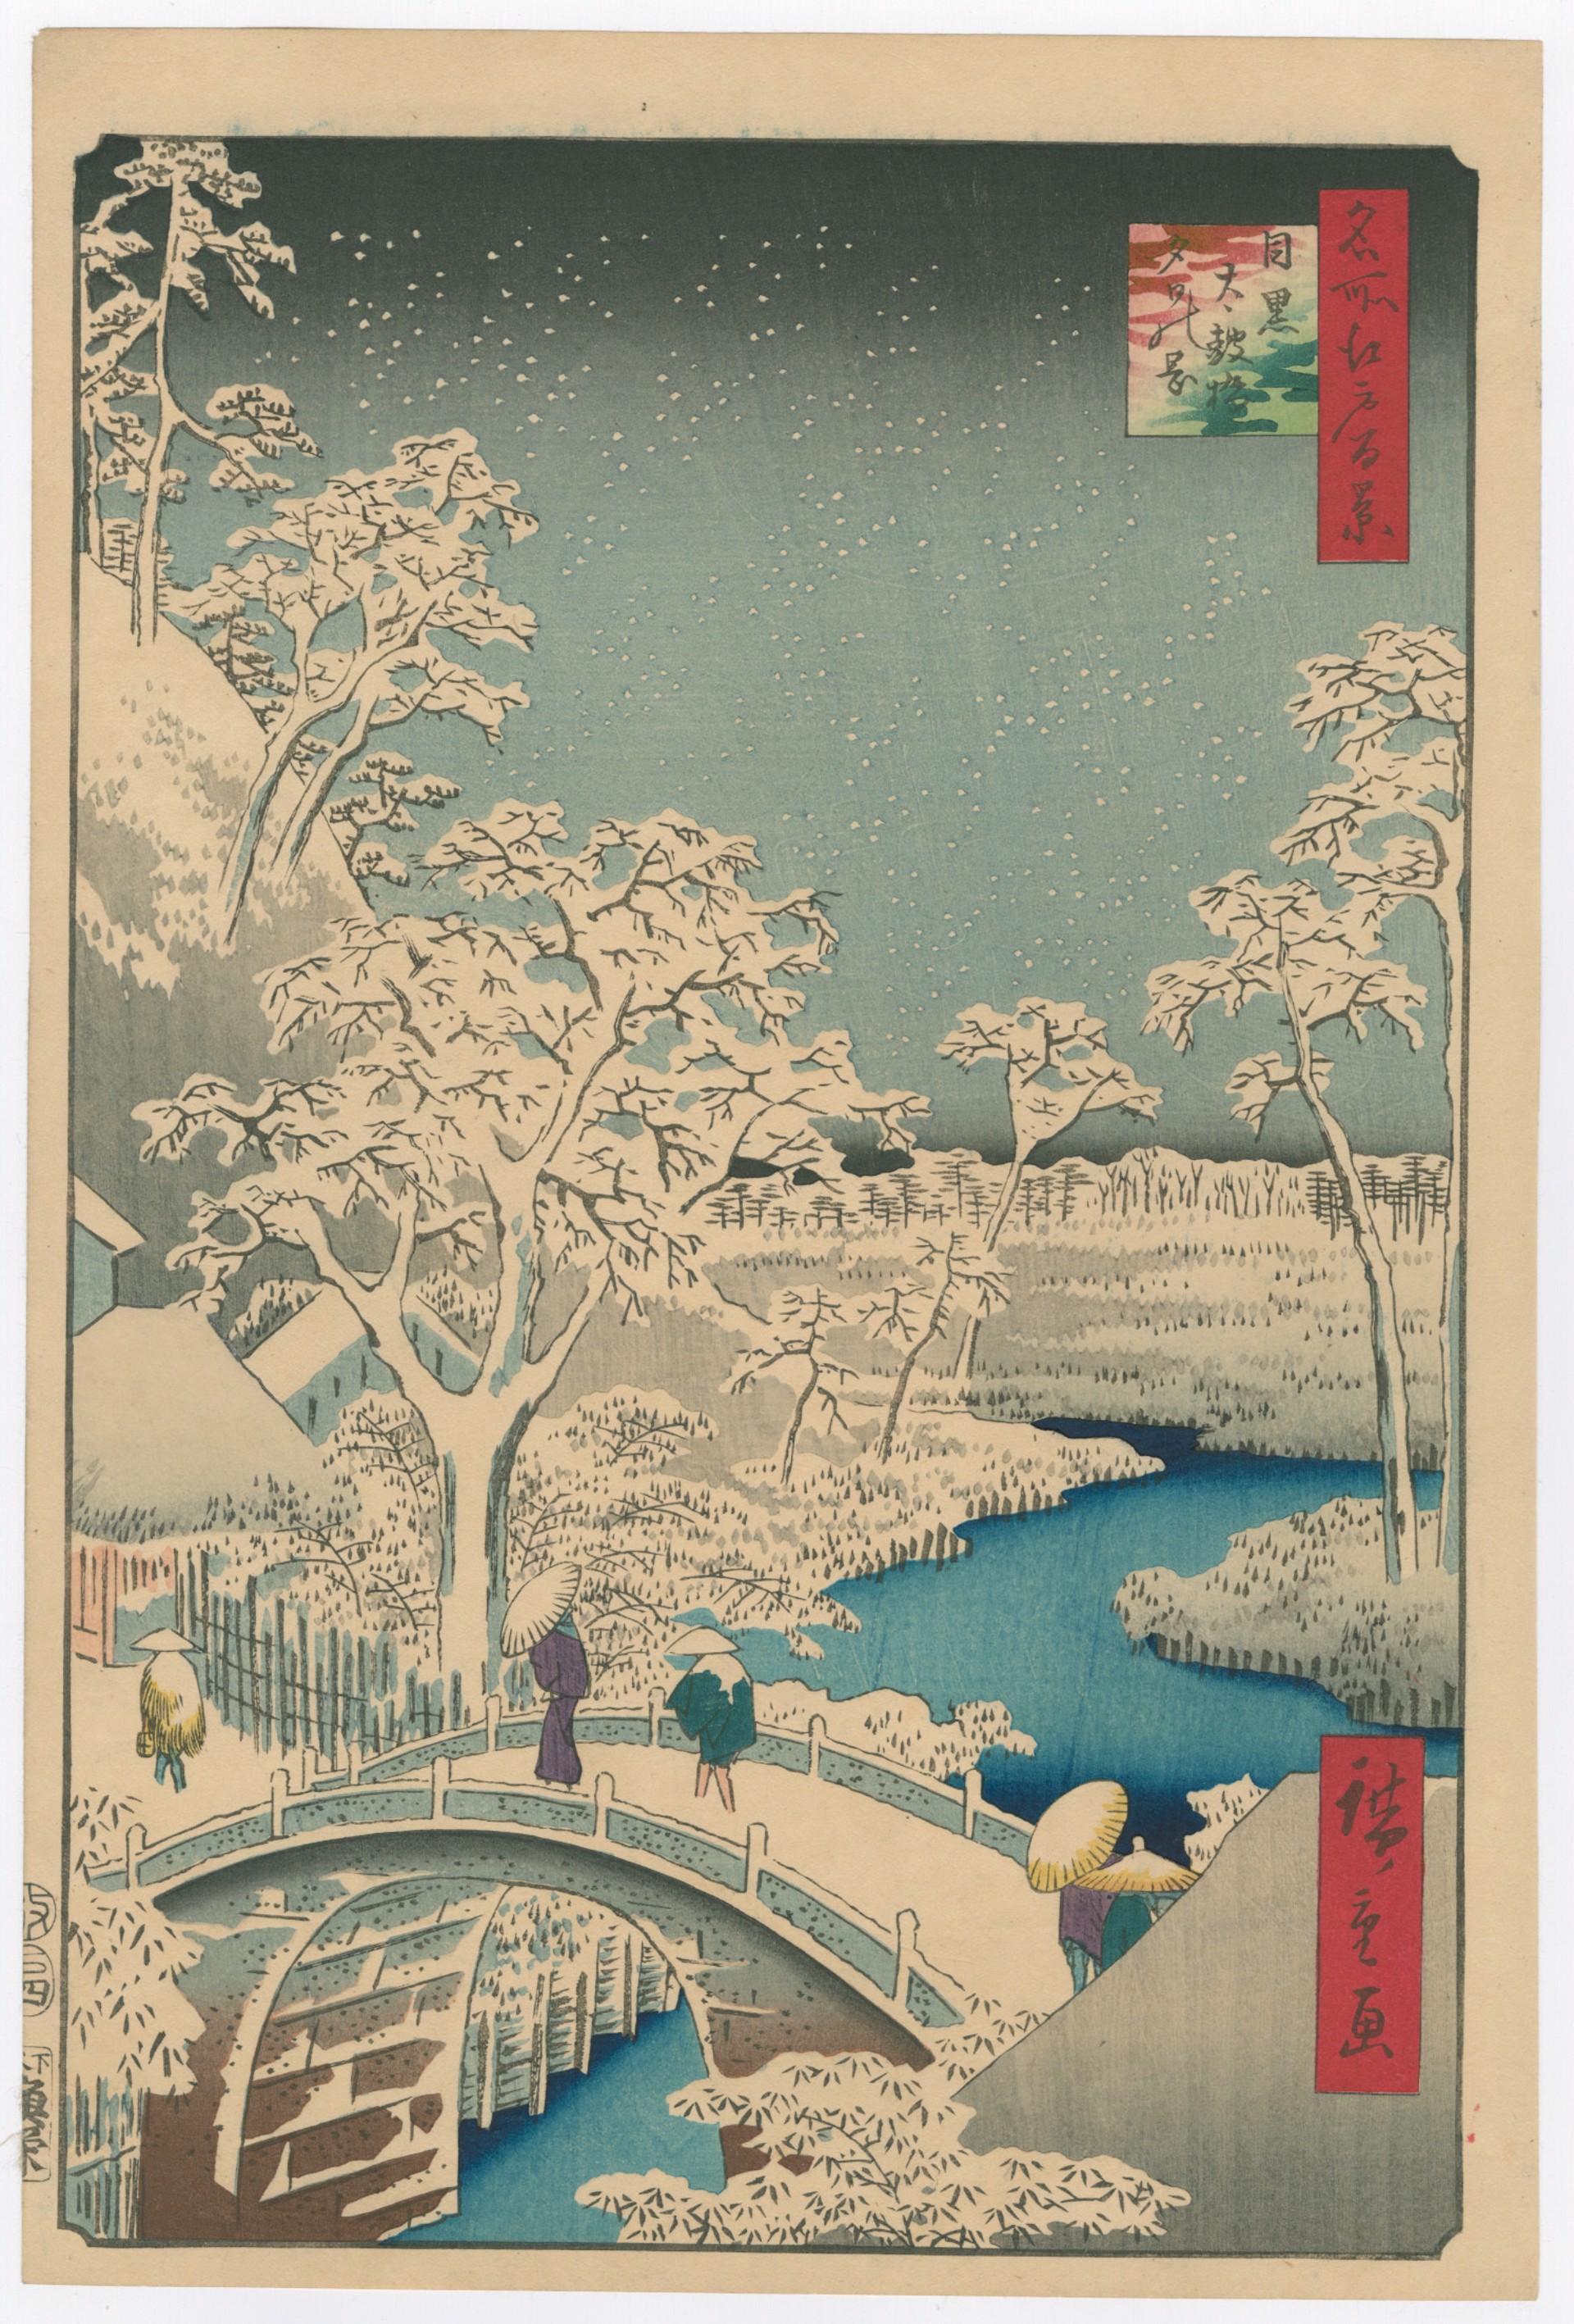 #111 Drum Bridge and Sunset Hill, Meguro 100 Views of Edo by Hiroshige